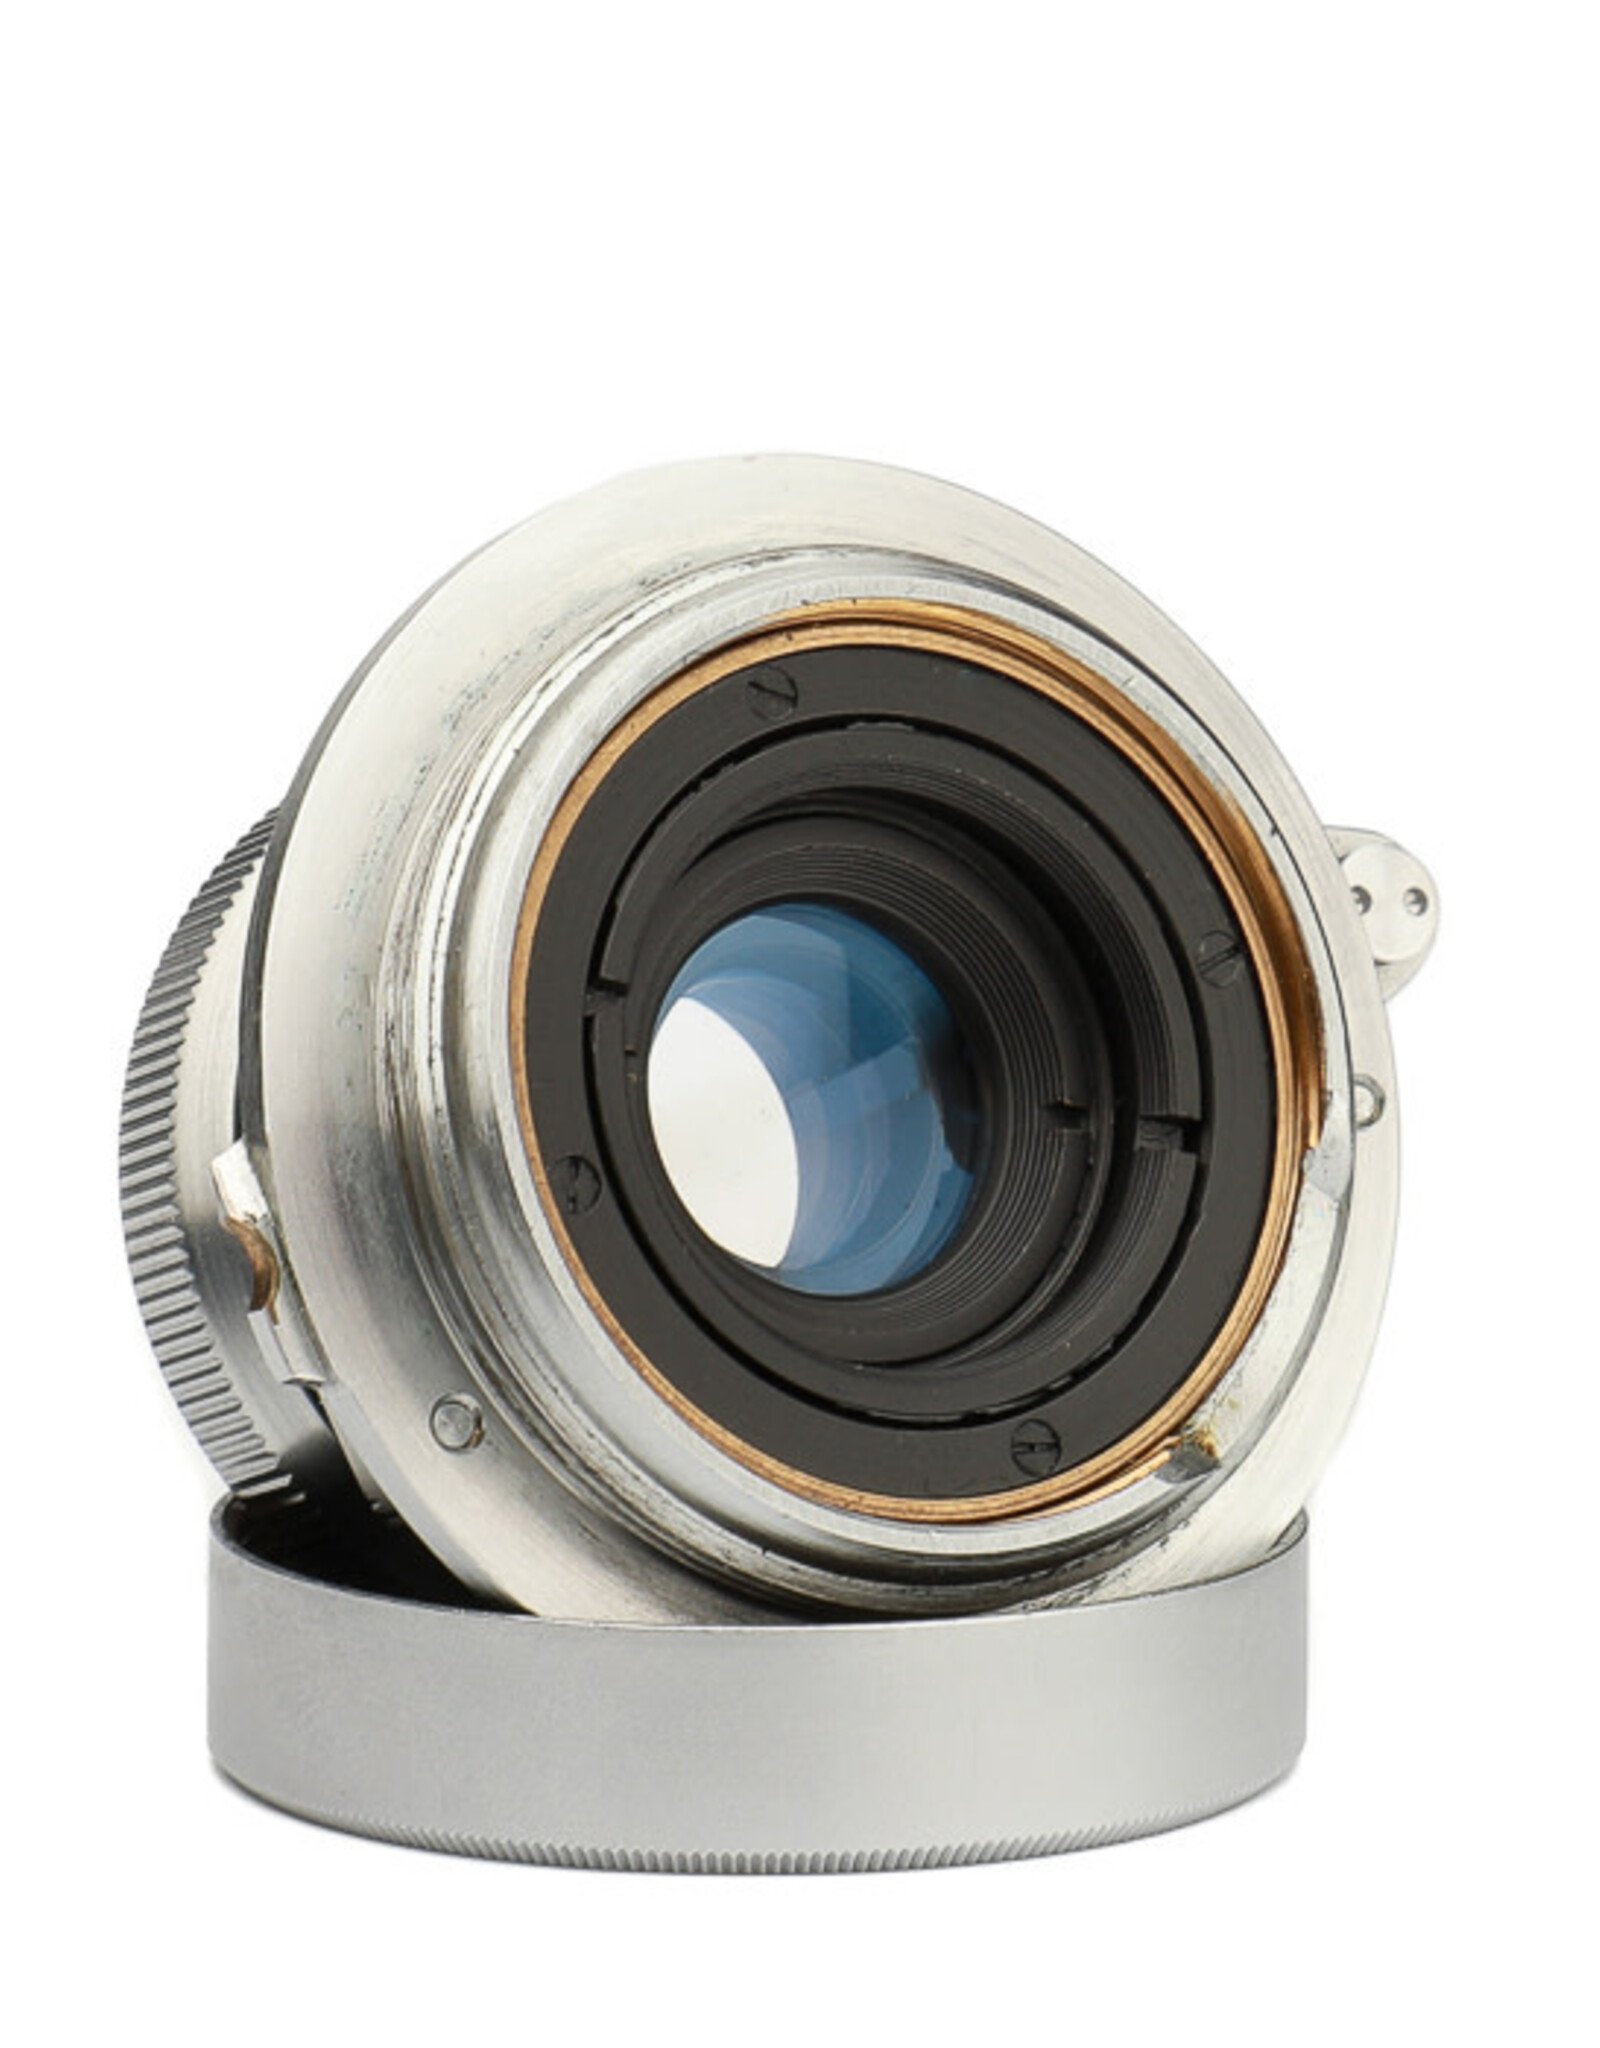 Leica Summaron 3.5cm 35mm F3.5 MF L395929